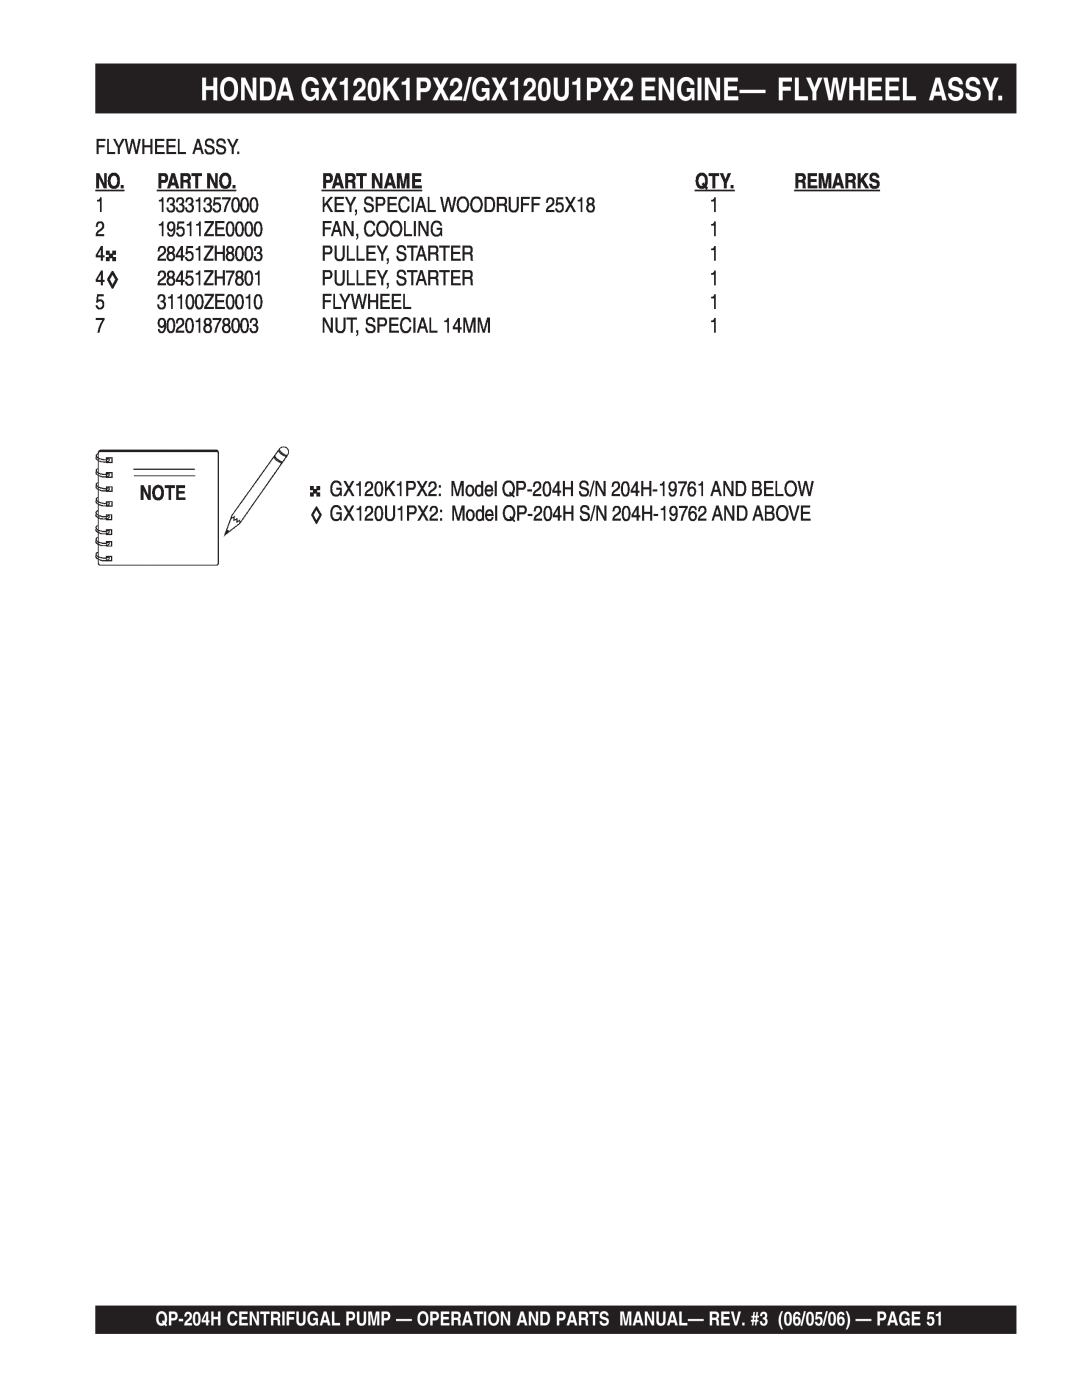 Multiquip QP-204H manual HONDA GX120K1PX2/GX120U1PX2 ENGINE- FLYWHEEL ASSY, Part Name 